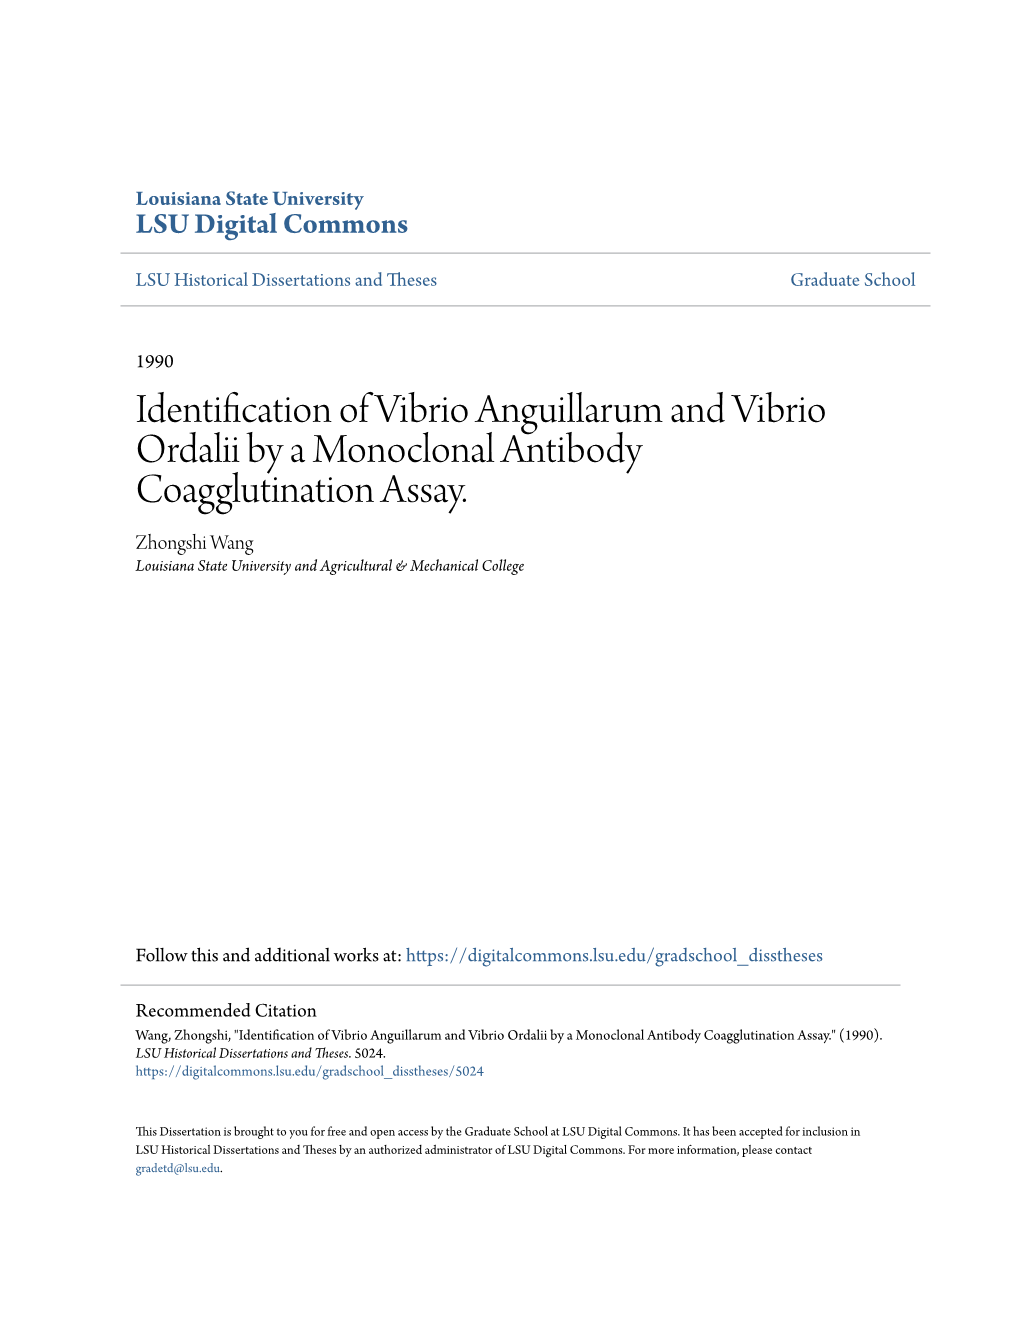 Identification of Vibrio Anguillarum and Vibrio Ordalii by a Monoclonal Antibody Coagglutination Assay